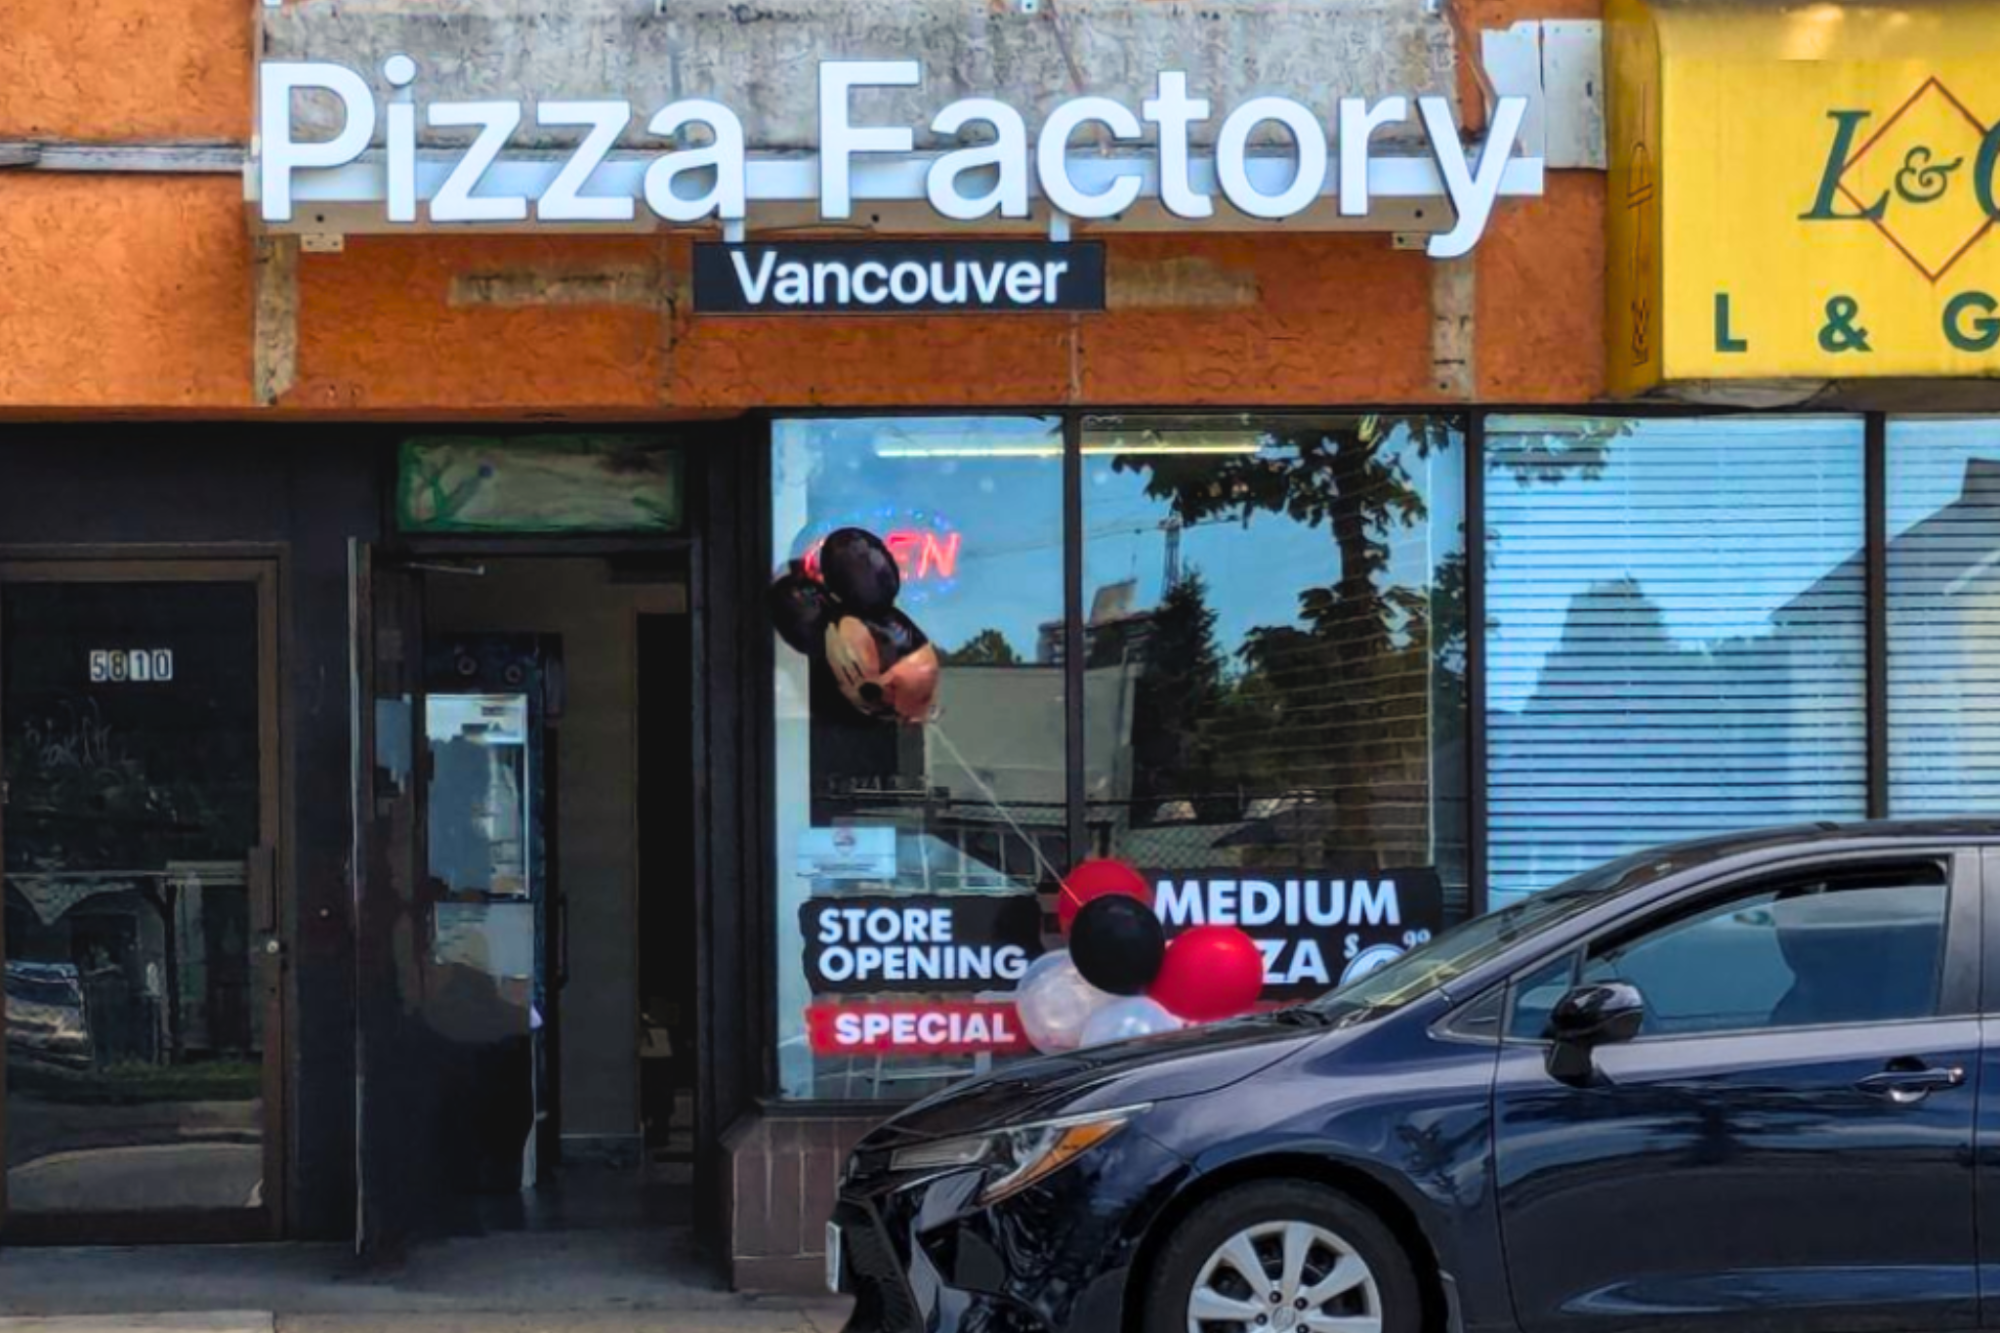 Pizza Factory Vancouver 5812 Fraser St, Vancouver, BC V5W 2Z5